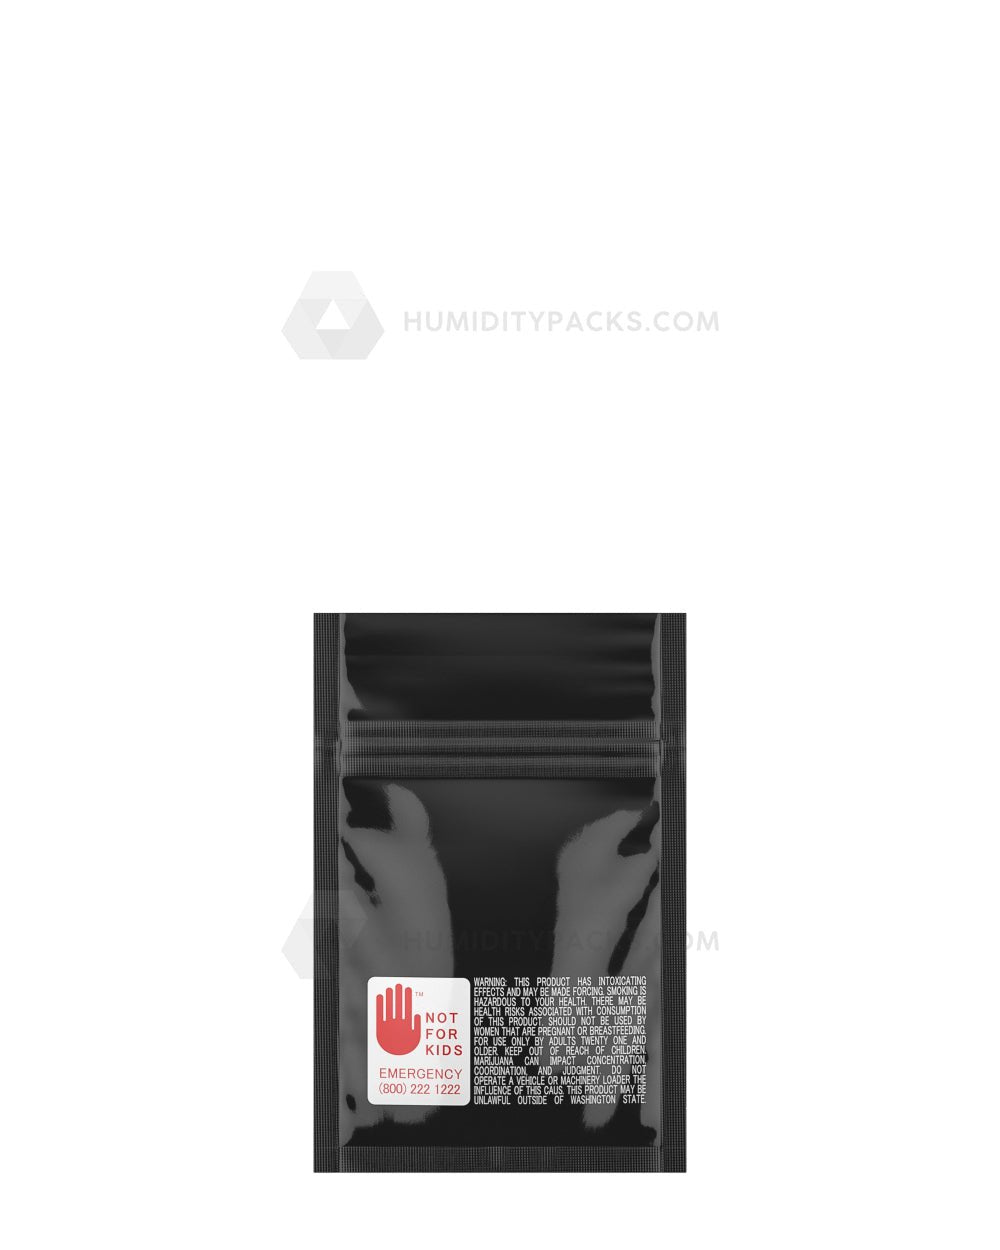 Glossy-Black 3" x 4.5" Vista Mylar Tamper Evident Bags for WA State (1 gram) 1000/Box Humidity Packs - 3